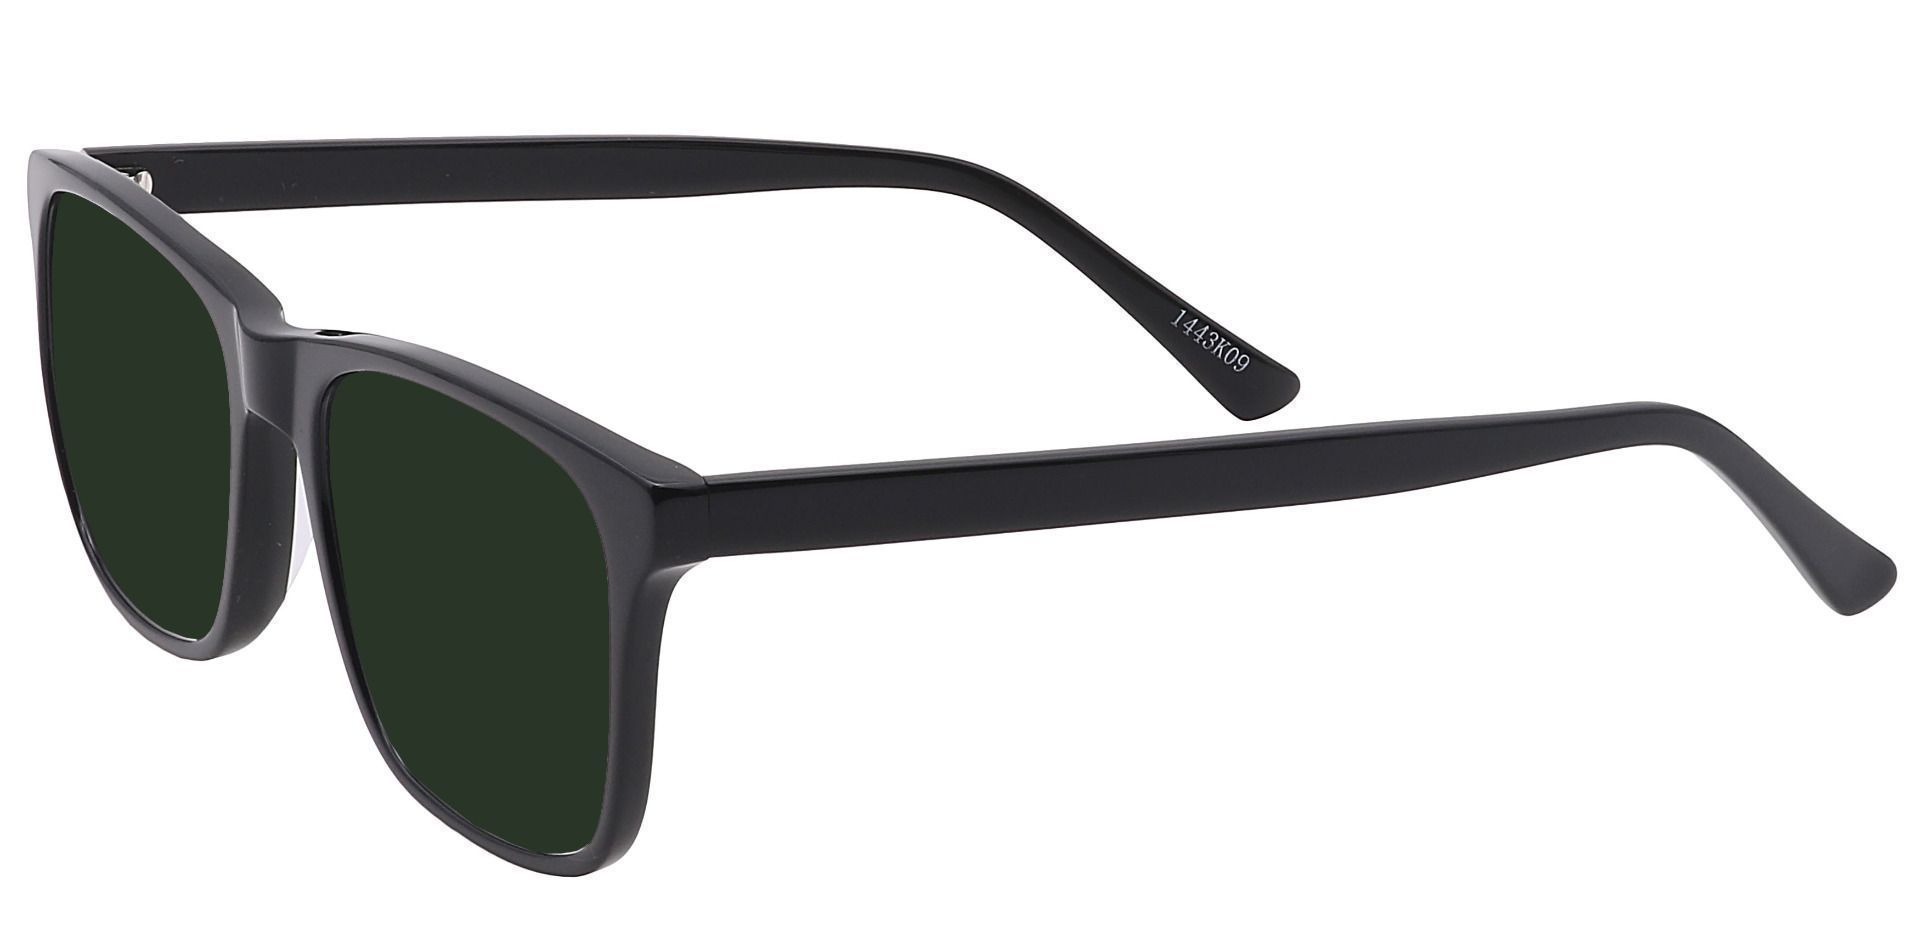 Cantina Square Prescription Sunglasses - Black Frame With Green Lenses